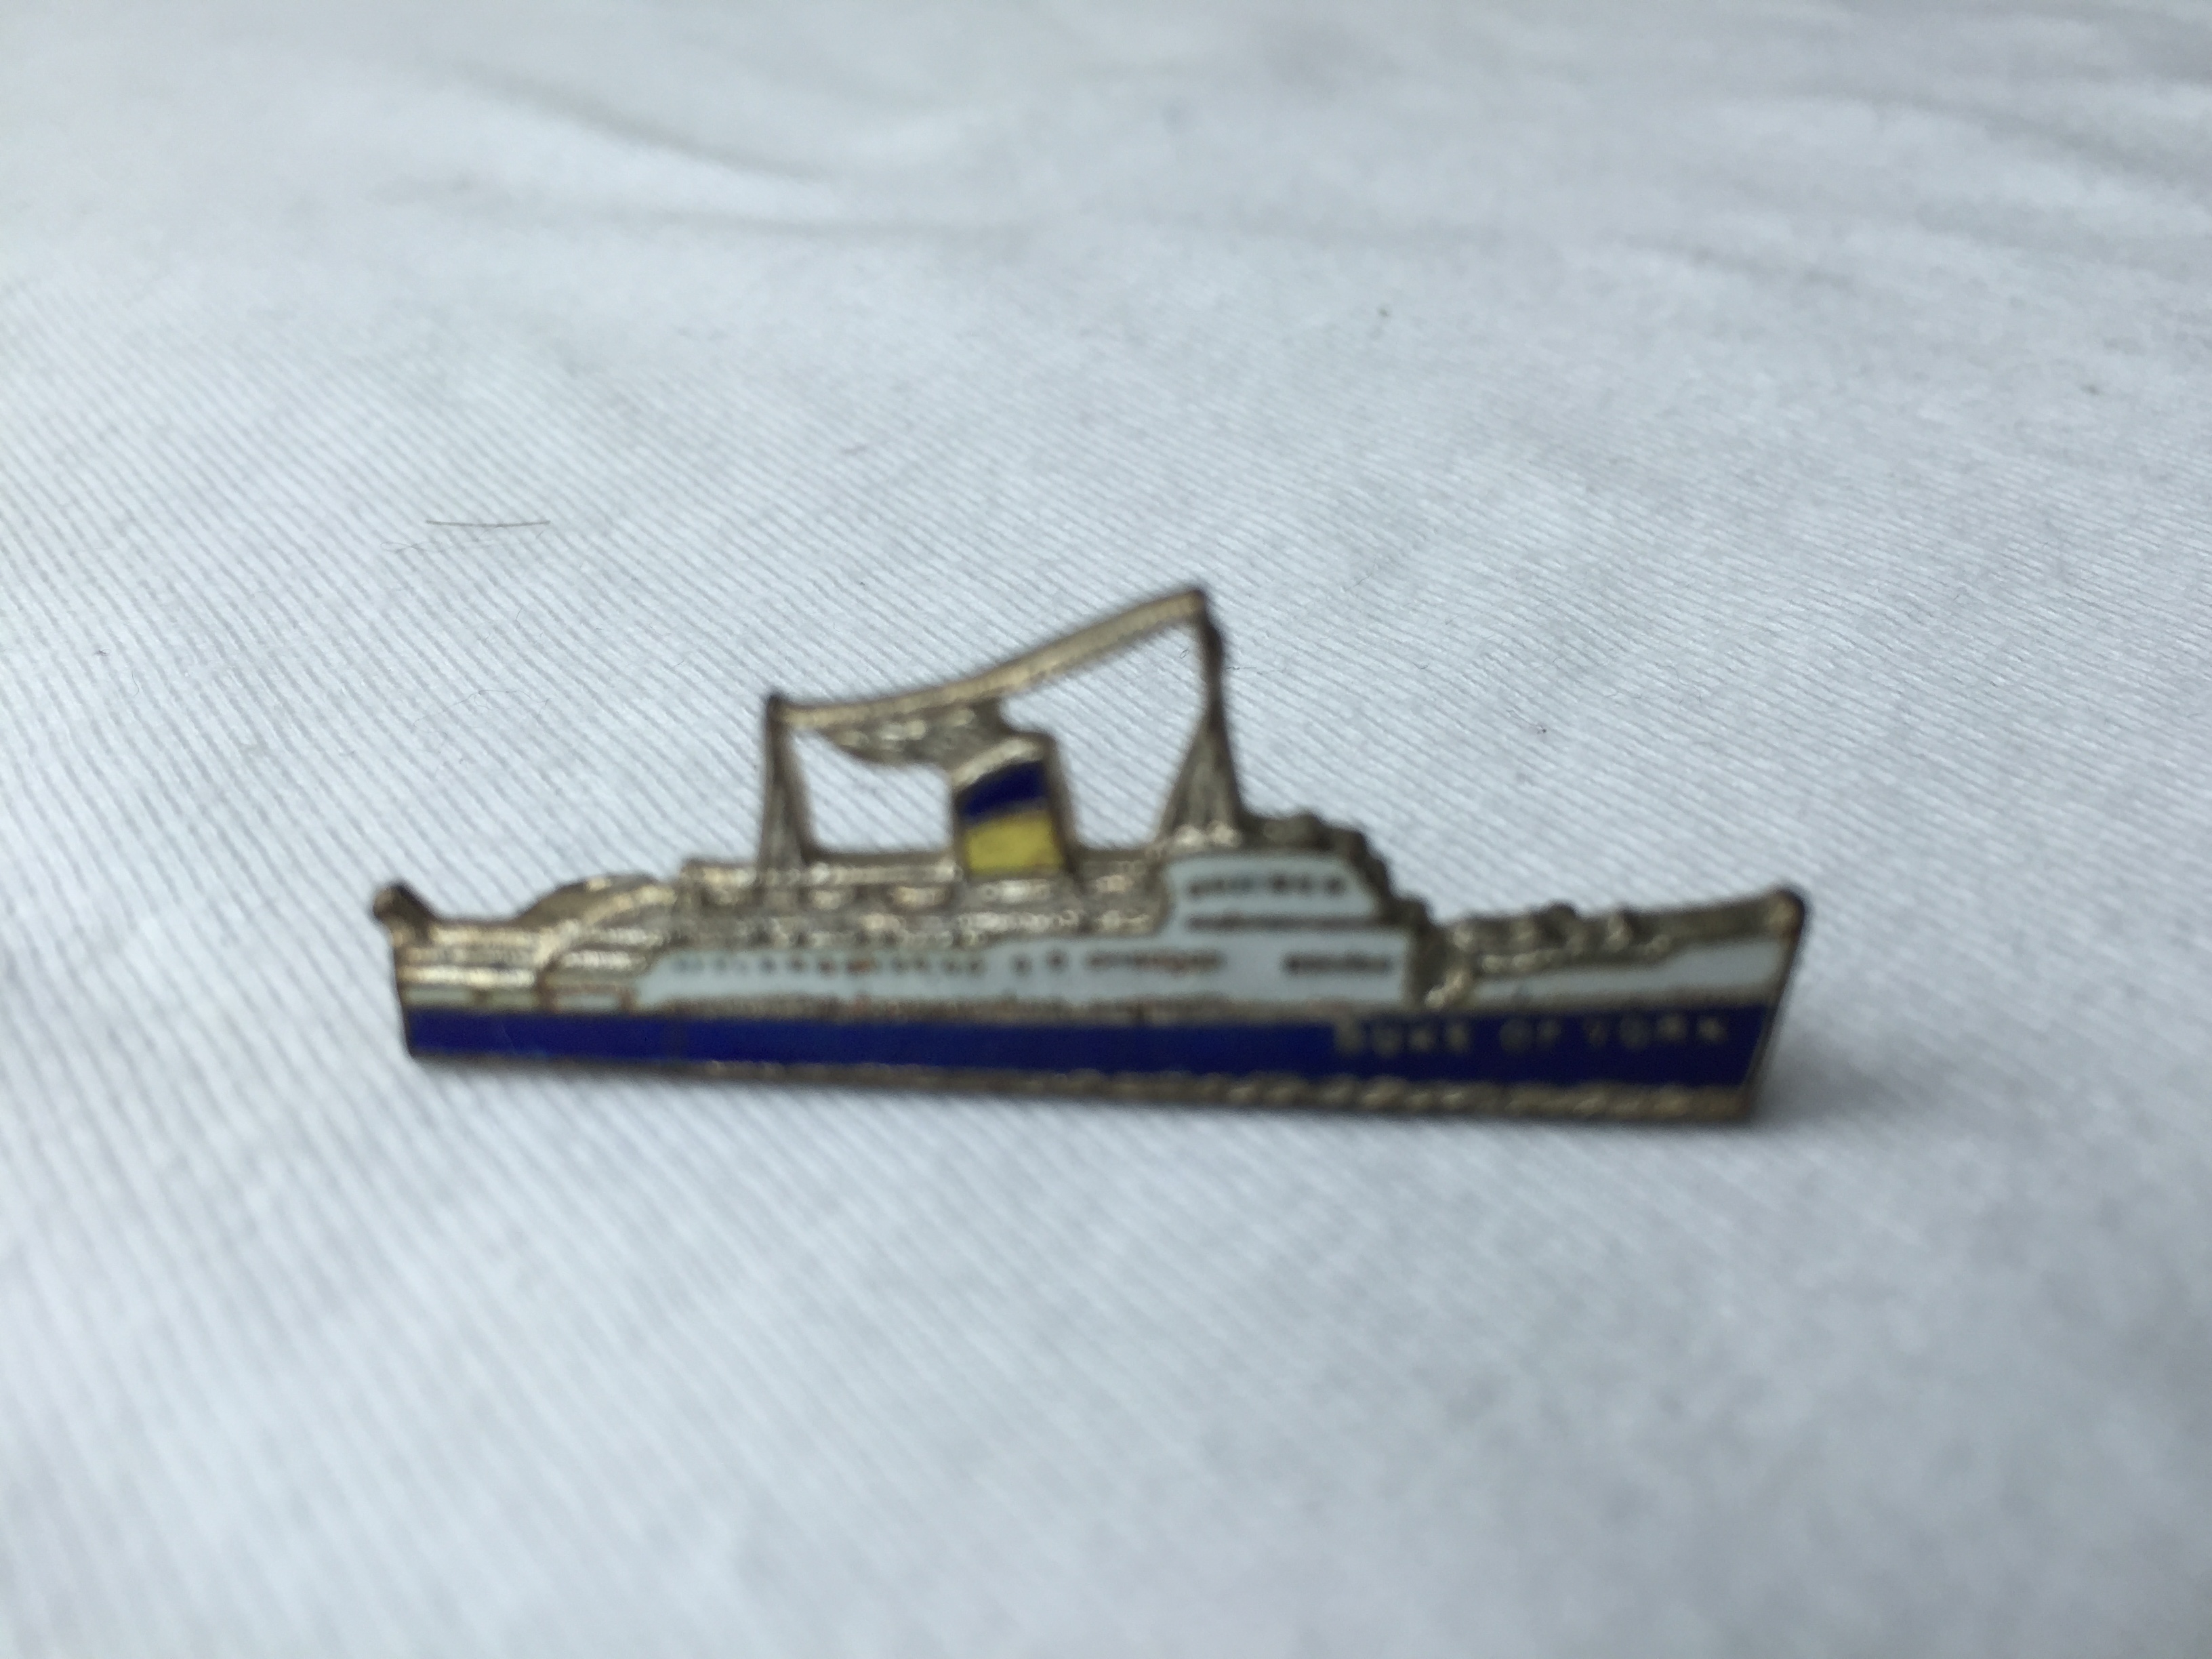 SHIP SHAPE LAPEL PIN FROM THE HARWICH HOOK FERRY VESSEL THE DUKE OF YORK